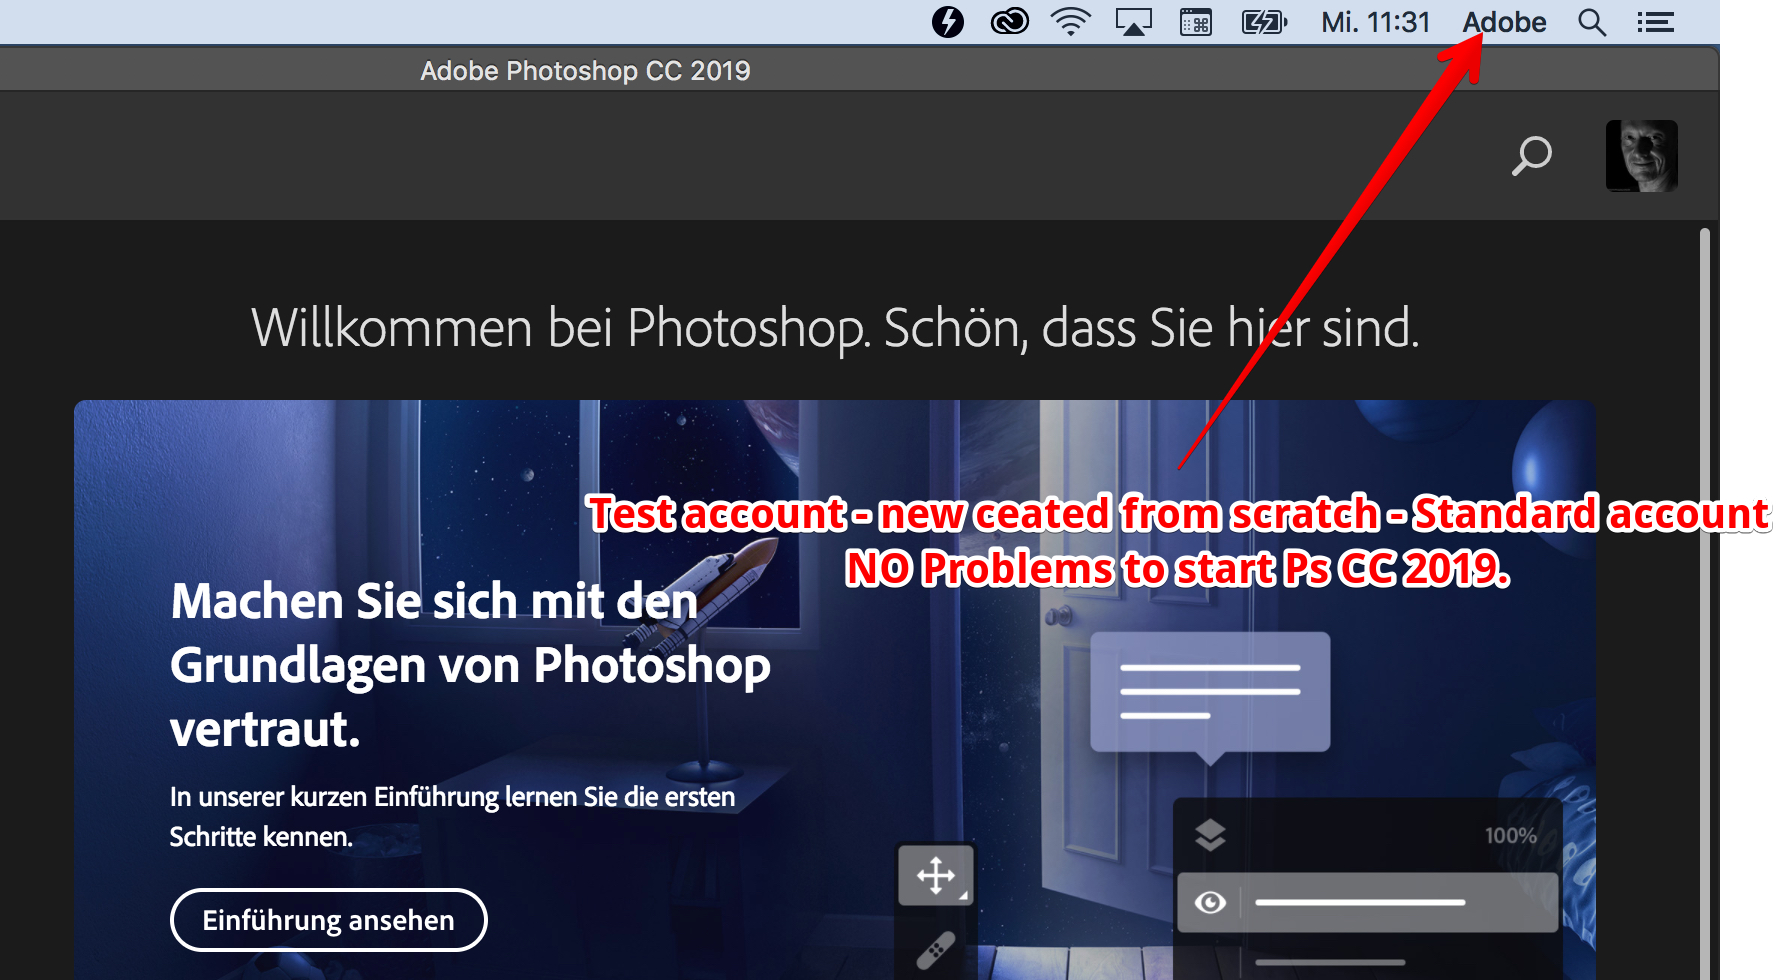 Adobe Photoshop CC 2019 2018-10-31 11-31-20.jpg